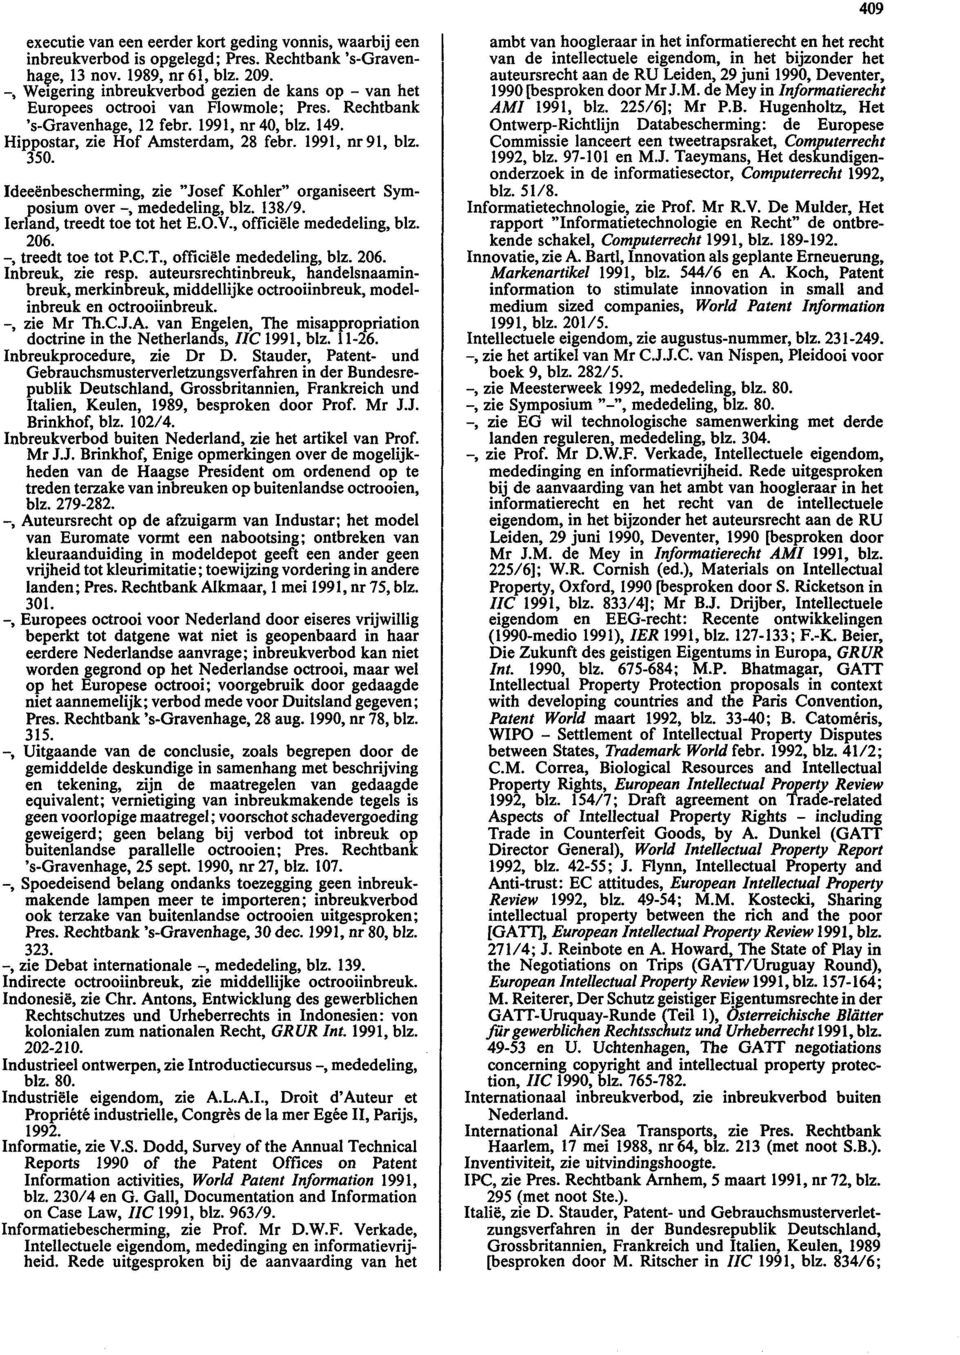 1991, nr91, blz. 350. Ideeënbescherming, zie "Josef Kohier" organiseert Symposium over -, mededeling, blz. 138/9. Ierland, treedt toe tot het E.O.V., officiële mededeling, blz. 206.